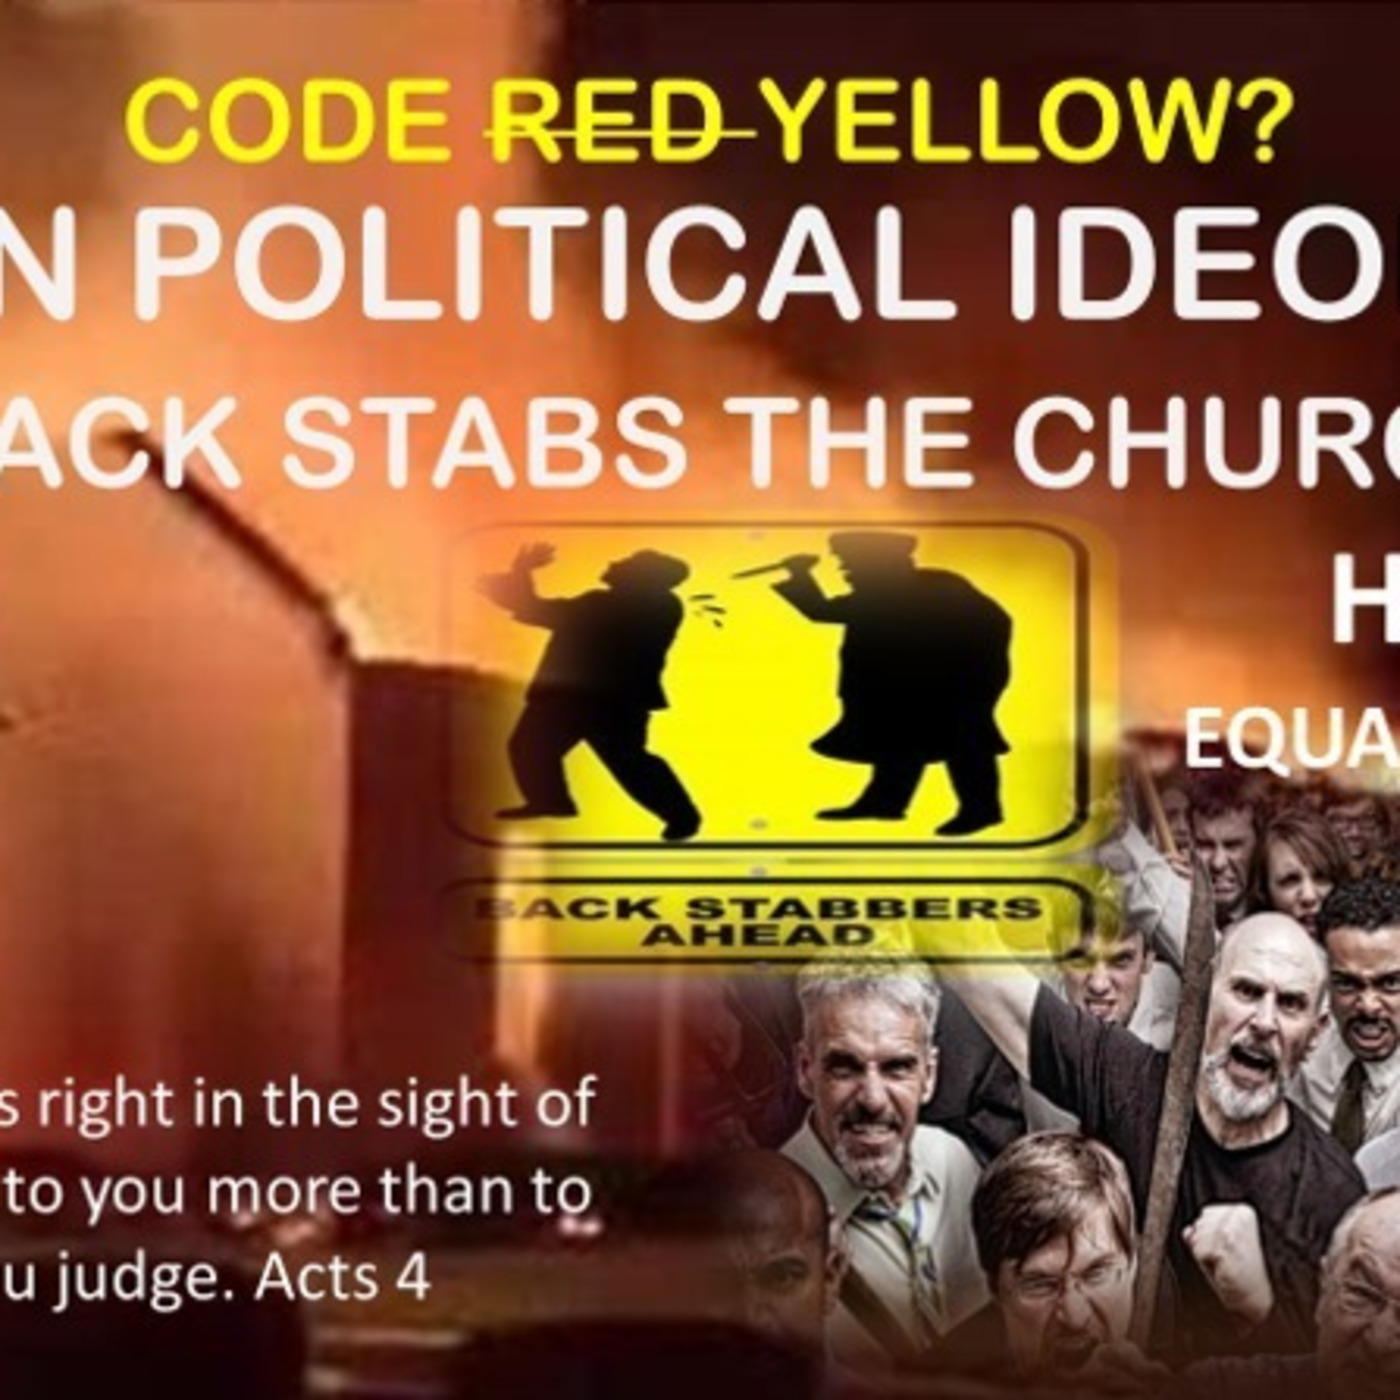 Episode 1636: CODE YELLOW POLITICAL IDEOLOGY BACKSTABS THE CHURCH P 3